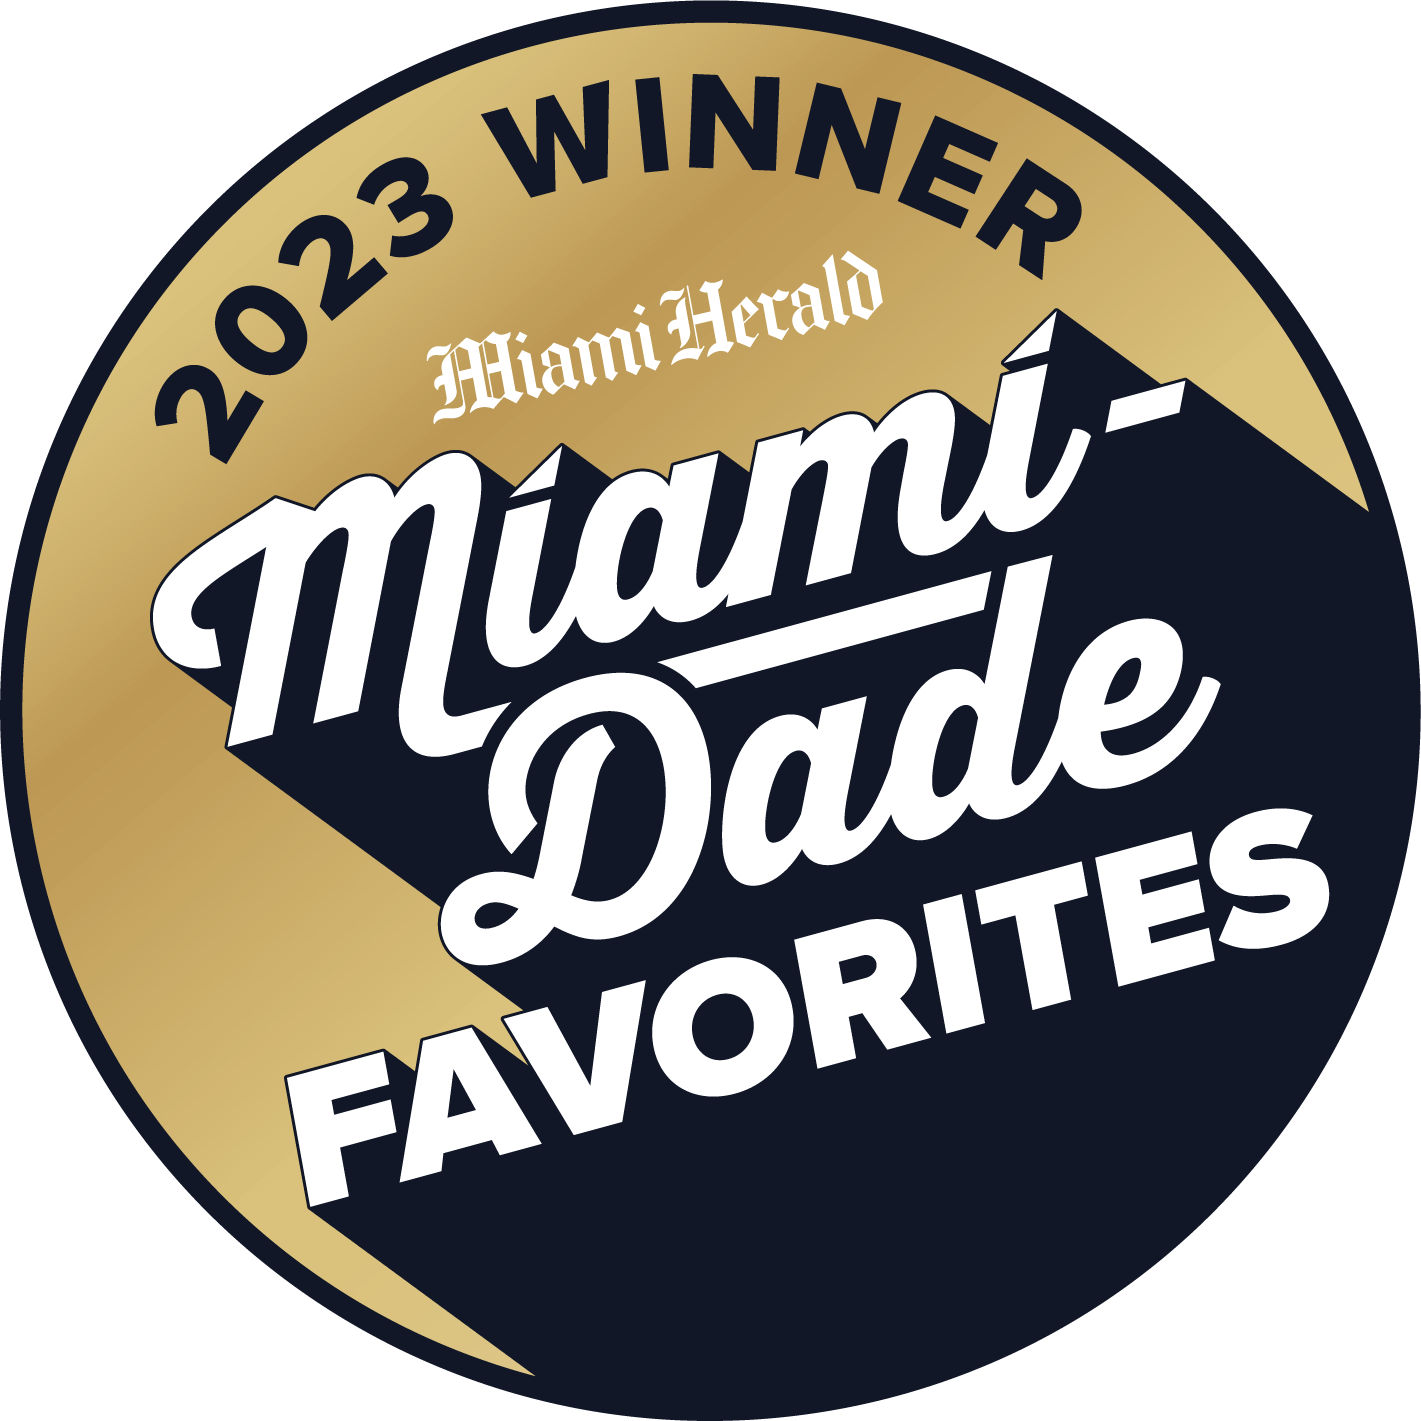 Miami Herald 2023 Winner Miami Dade Favorites